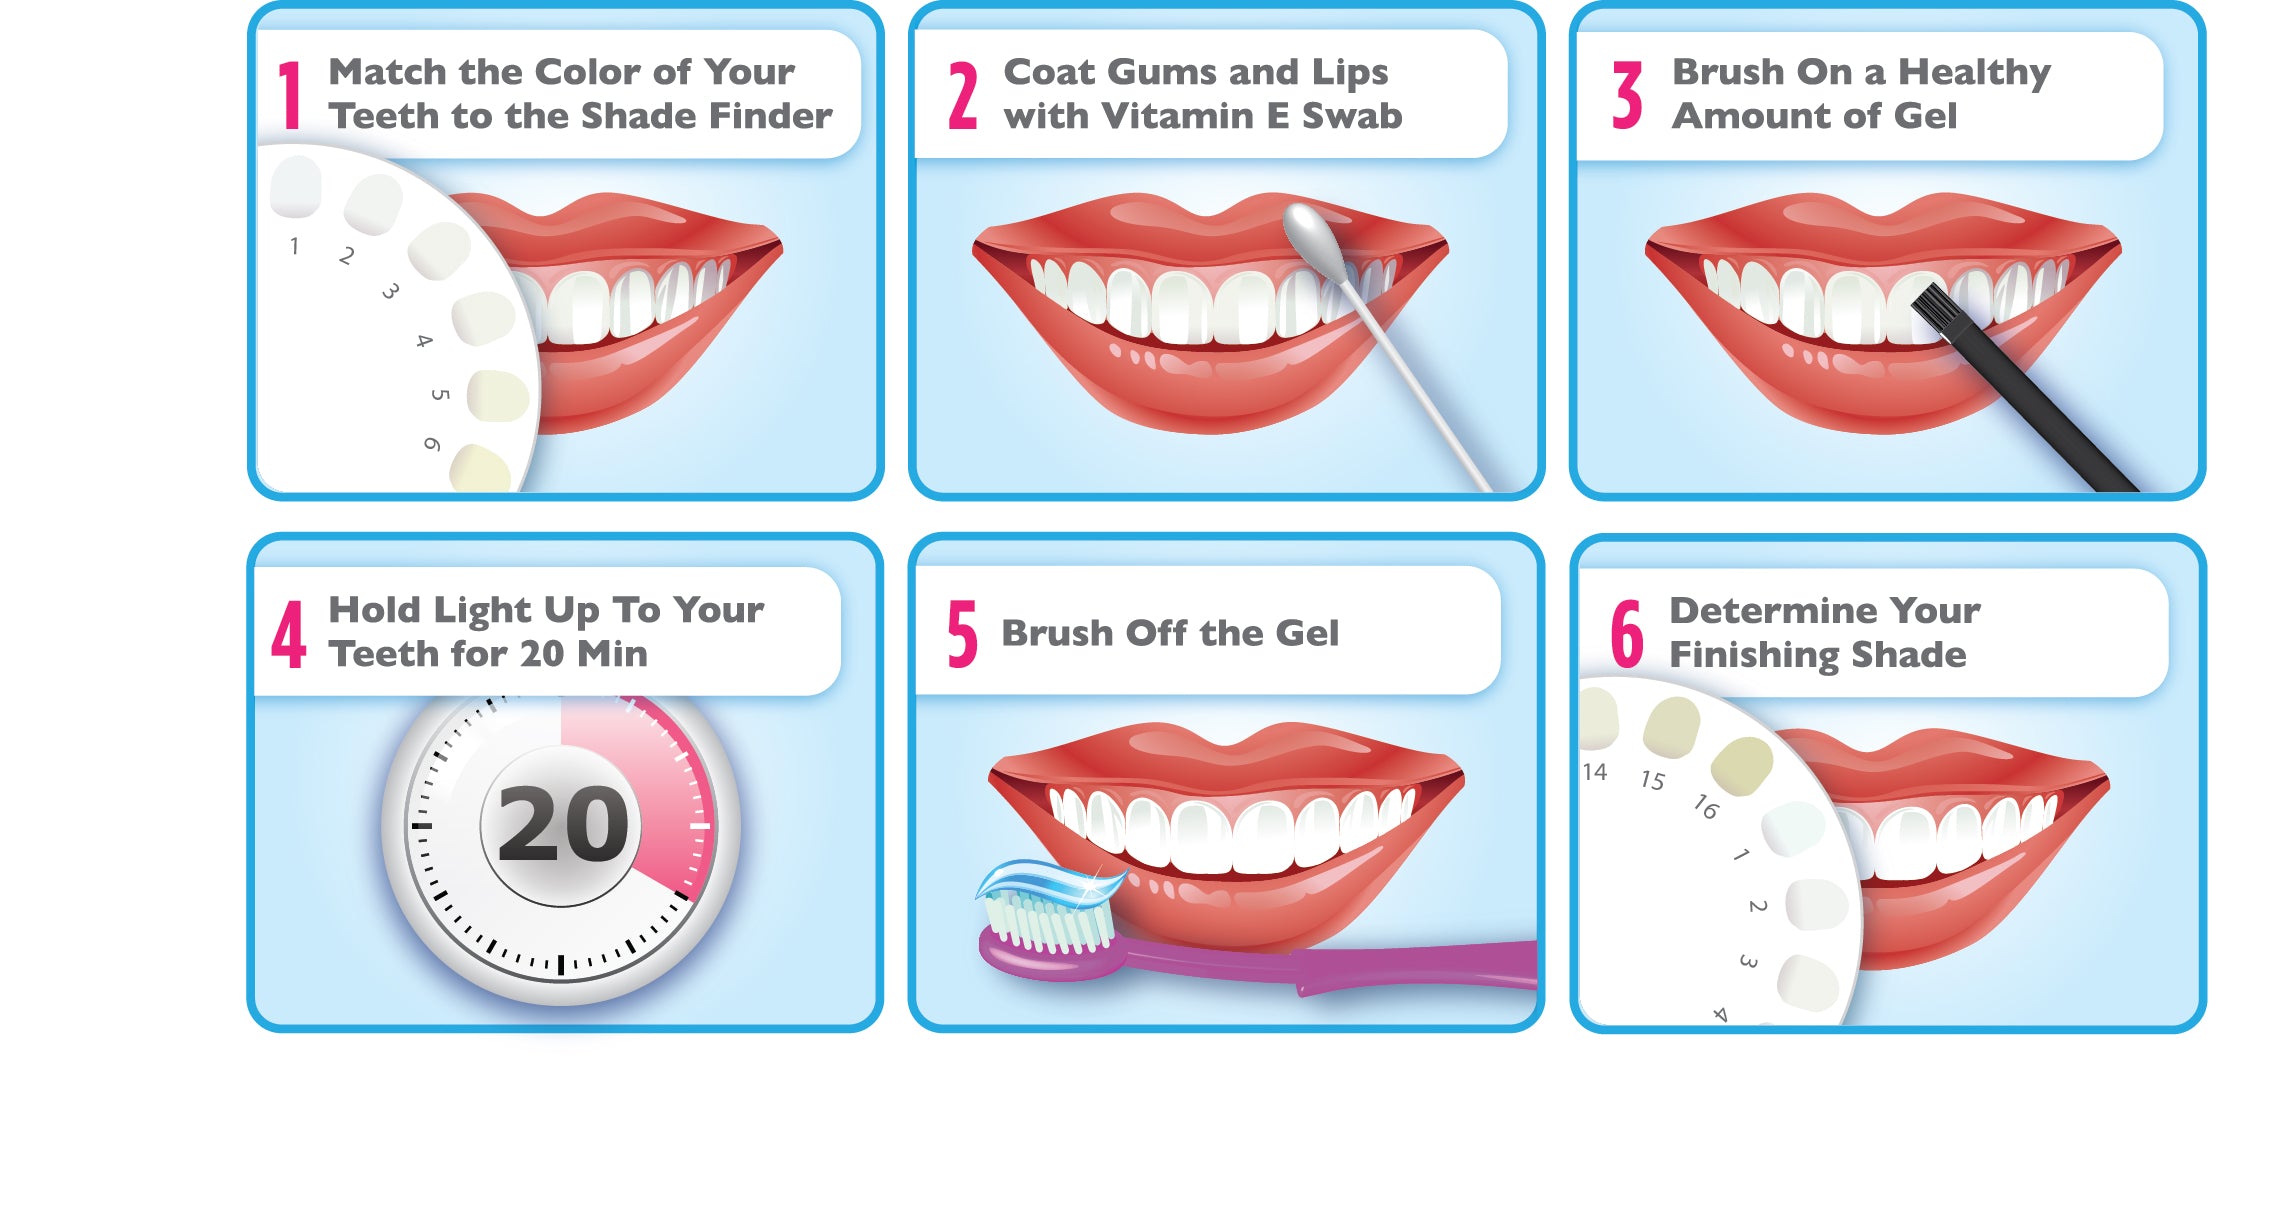 Dial A Smile Professional Teeth Whitening Kit